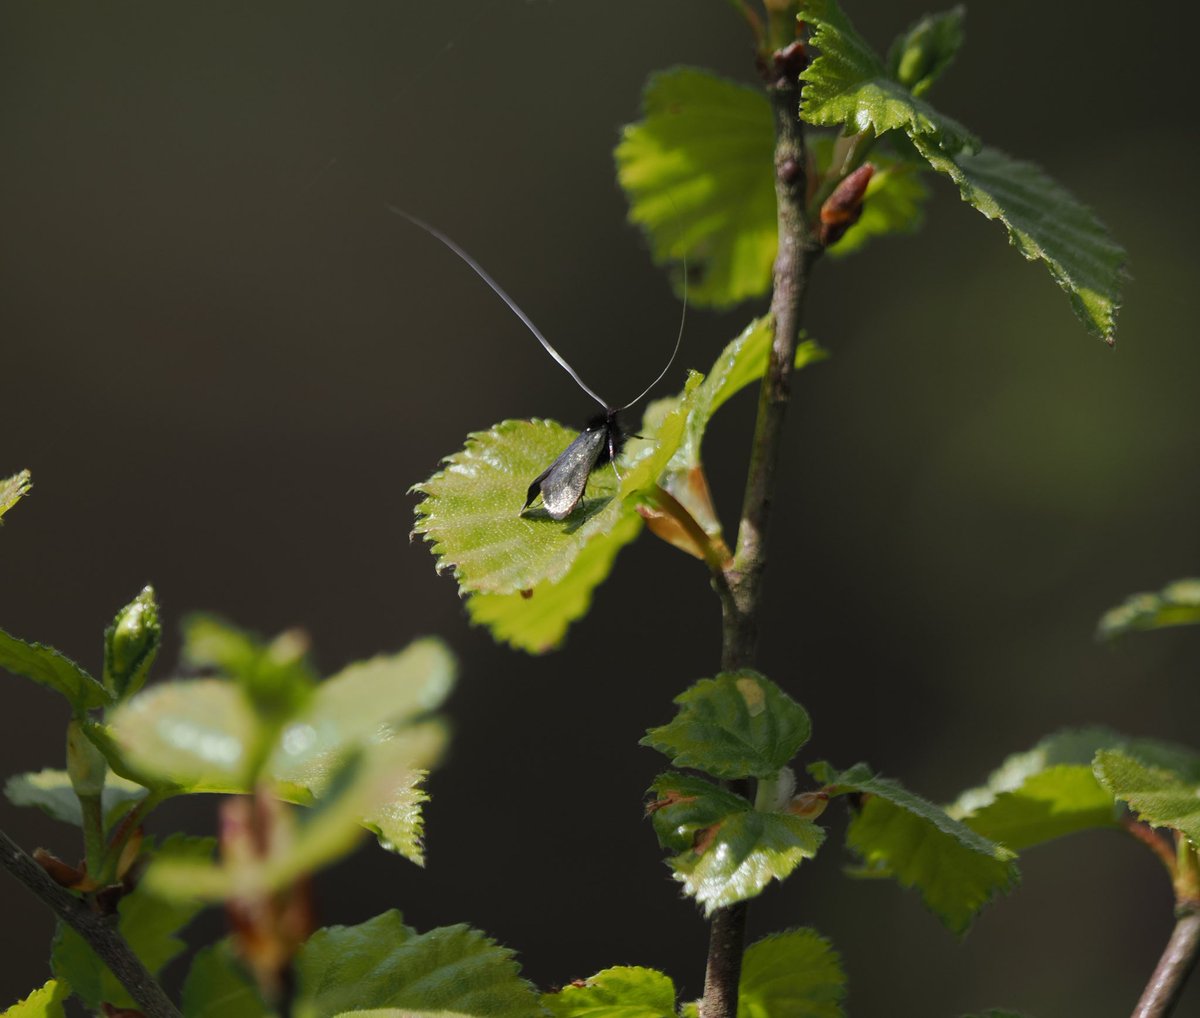 Adela reaumurella (green long-horn) on heathland on the Quantock Hills, Somerset this afternoon. Common Heath moth also seen. @quantockhills @BCSomerset @MothsSomerset